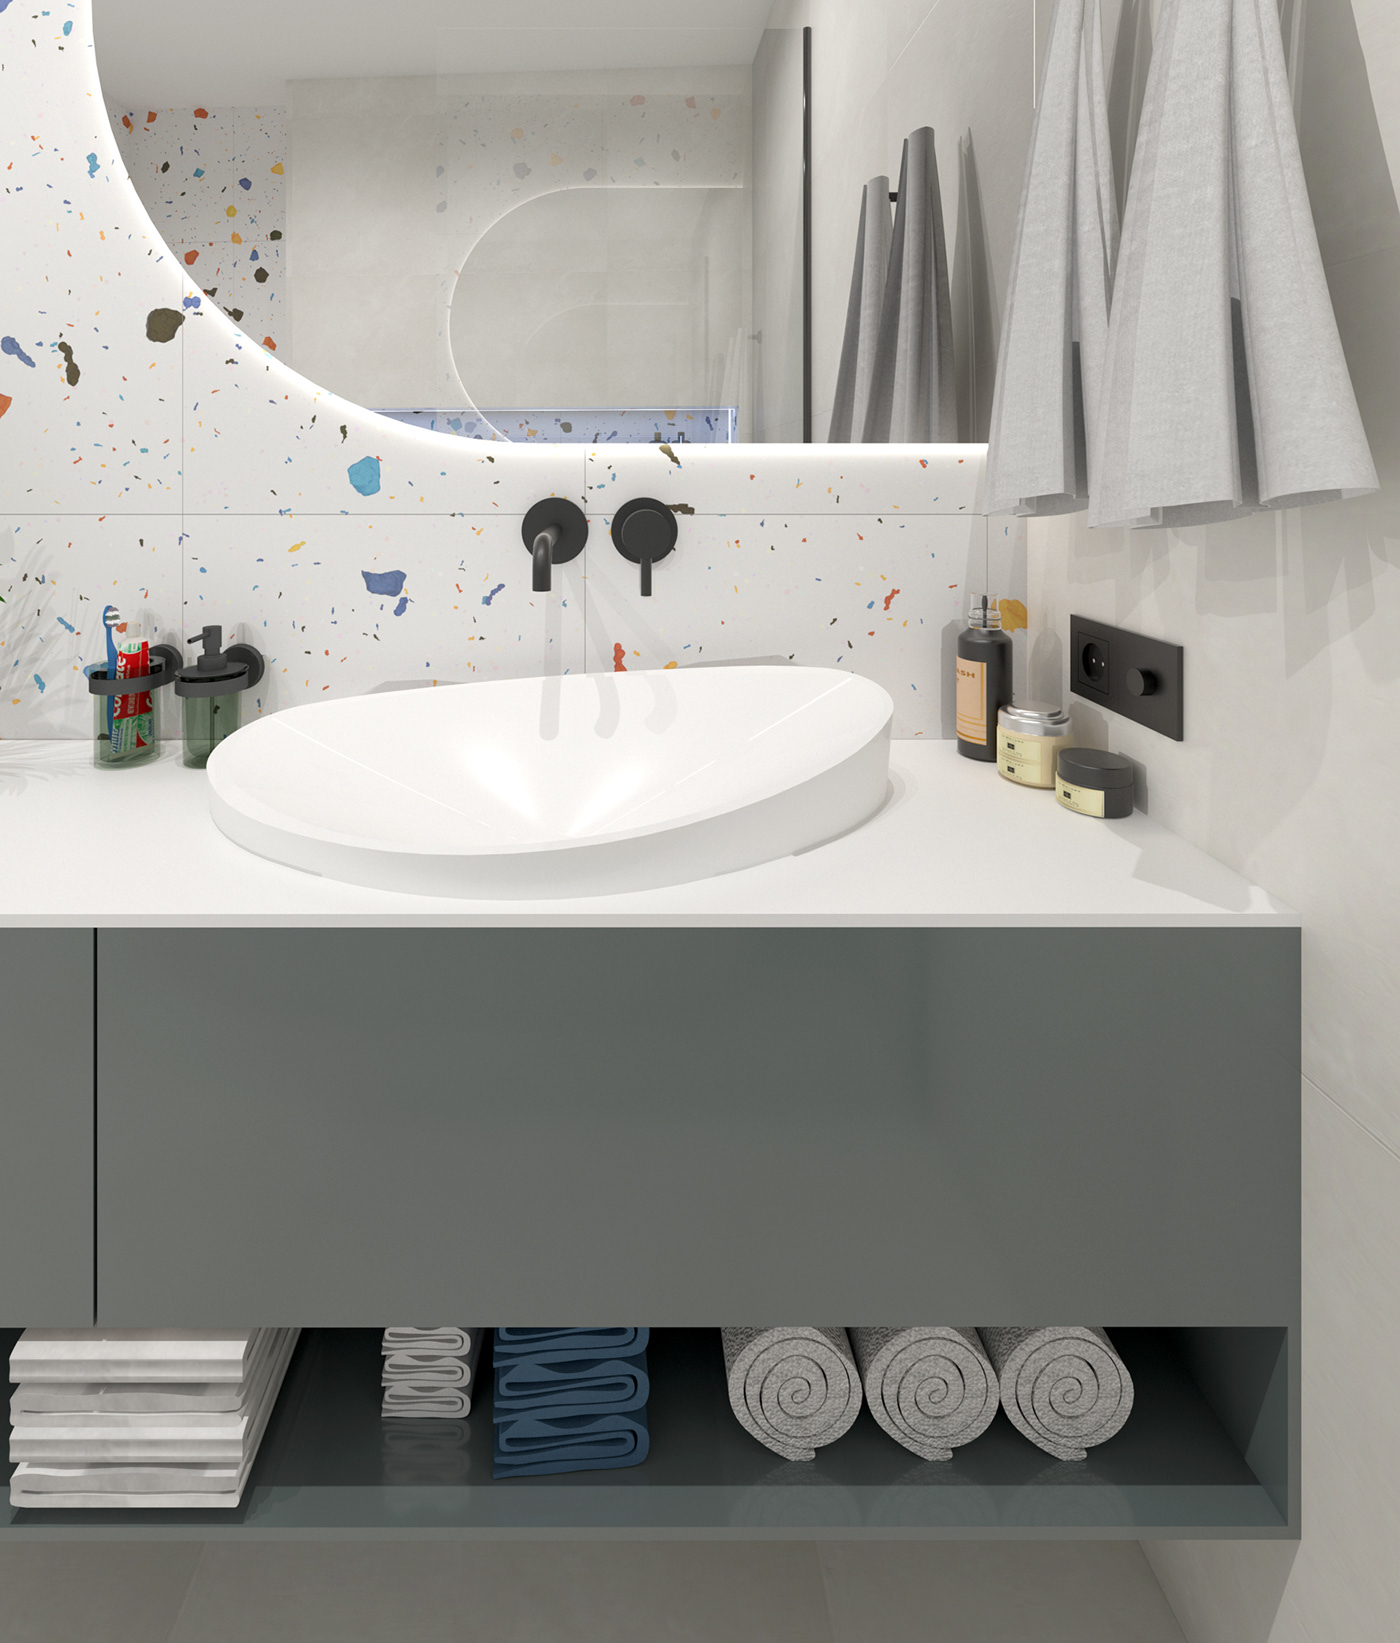 bathroom design interiordesign Render renovation TerraZoo visualization 3D model architecture archviz